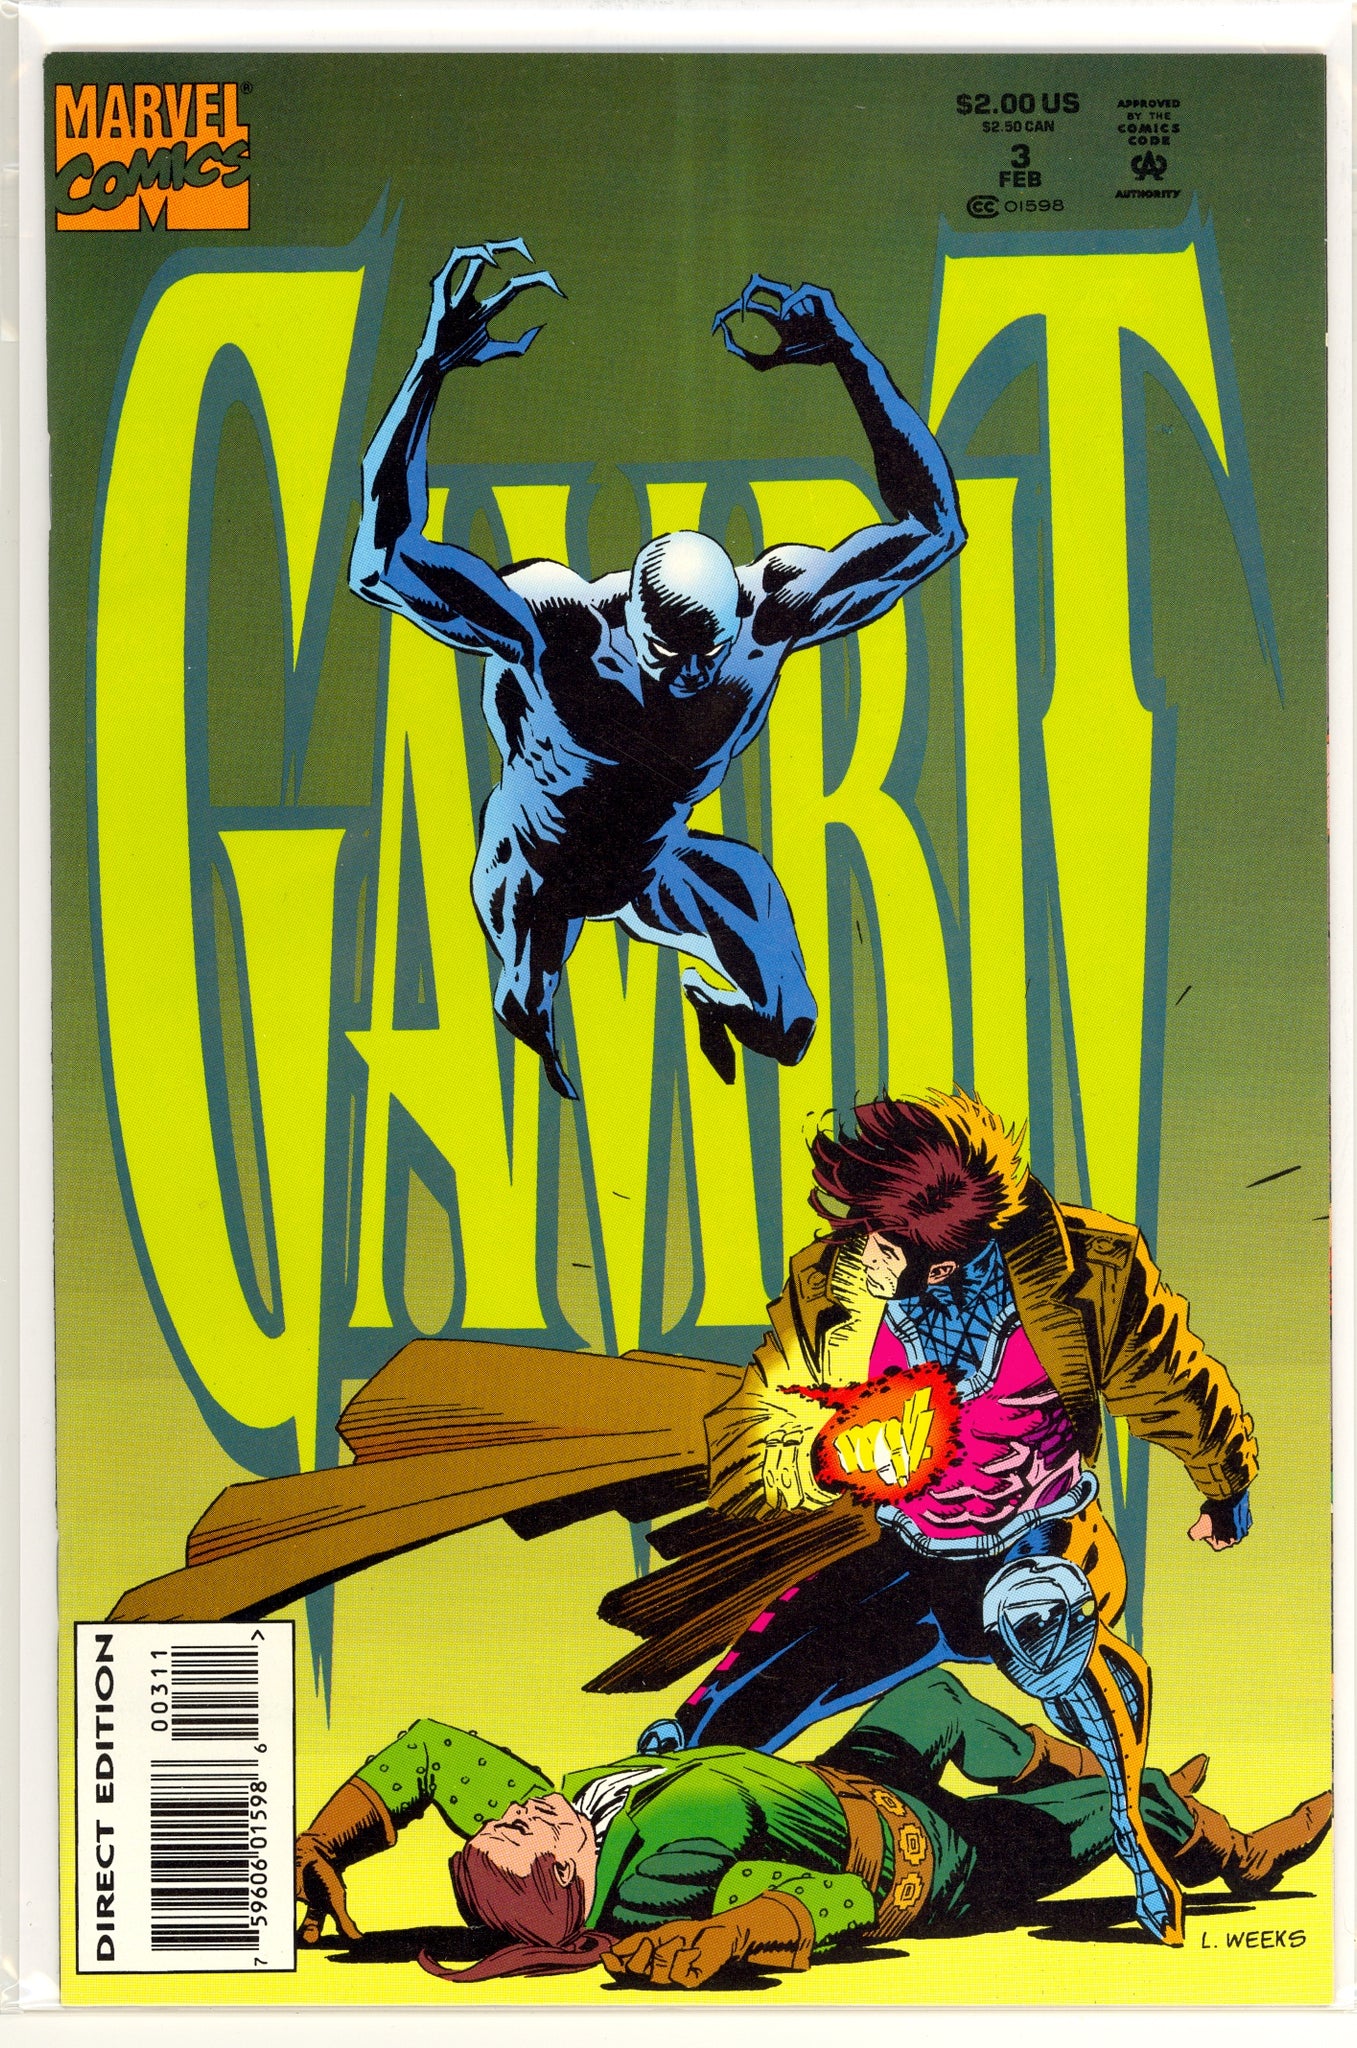 Gambit #3 (1994)